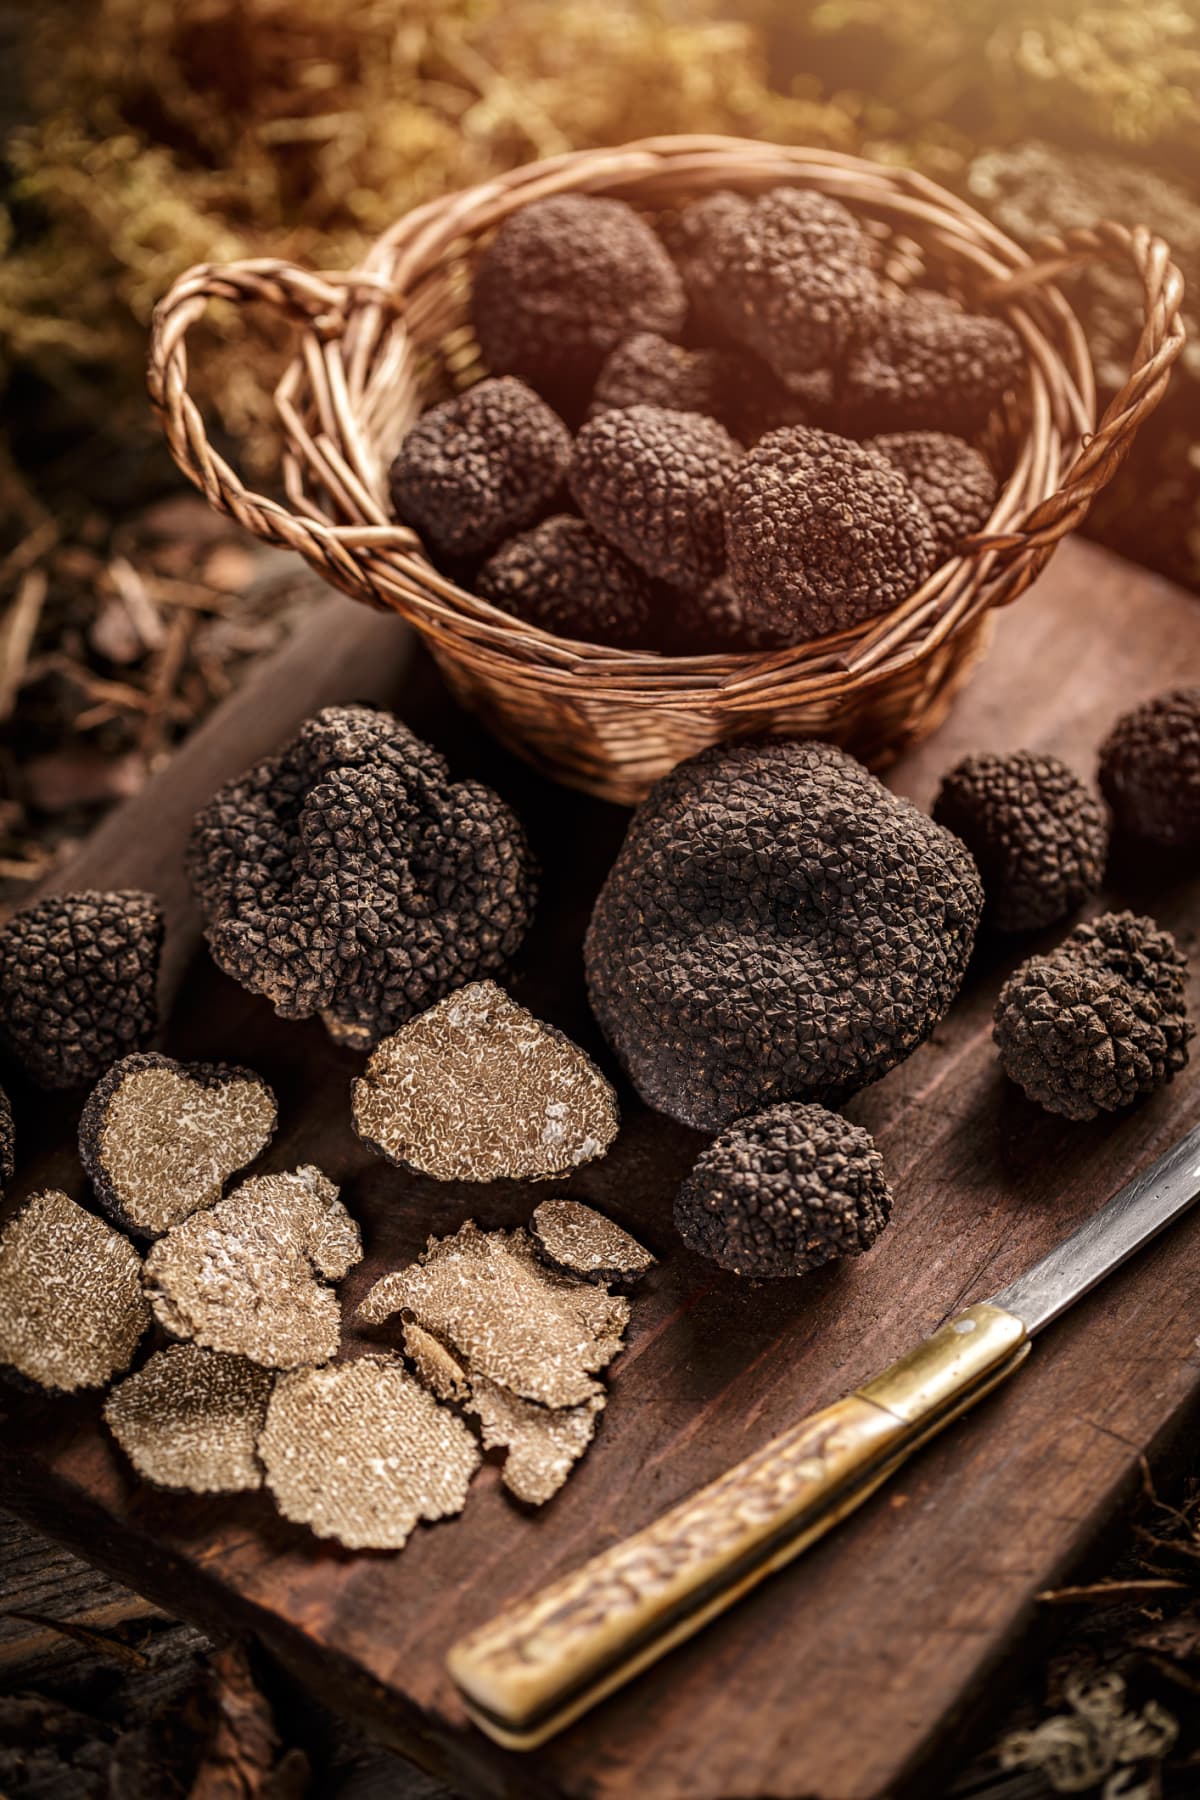 Heap of black truffle mushrooms, whole and slice